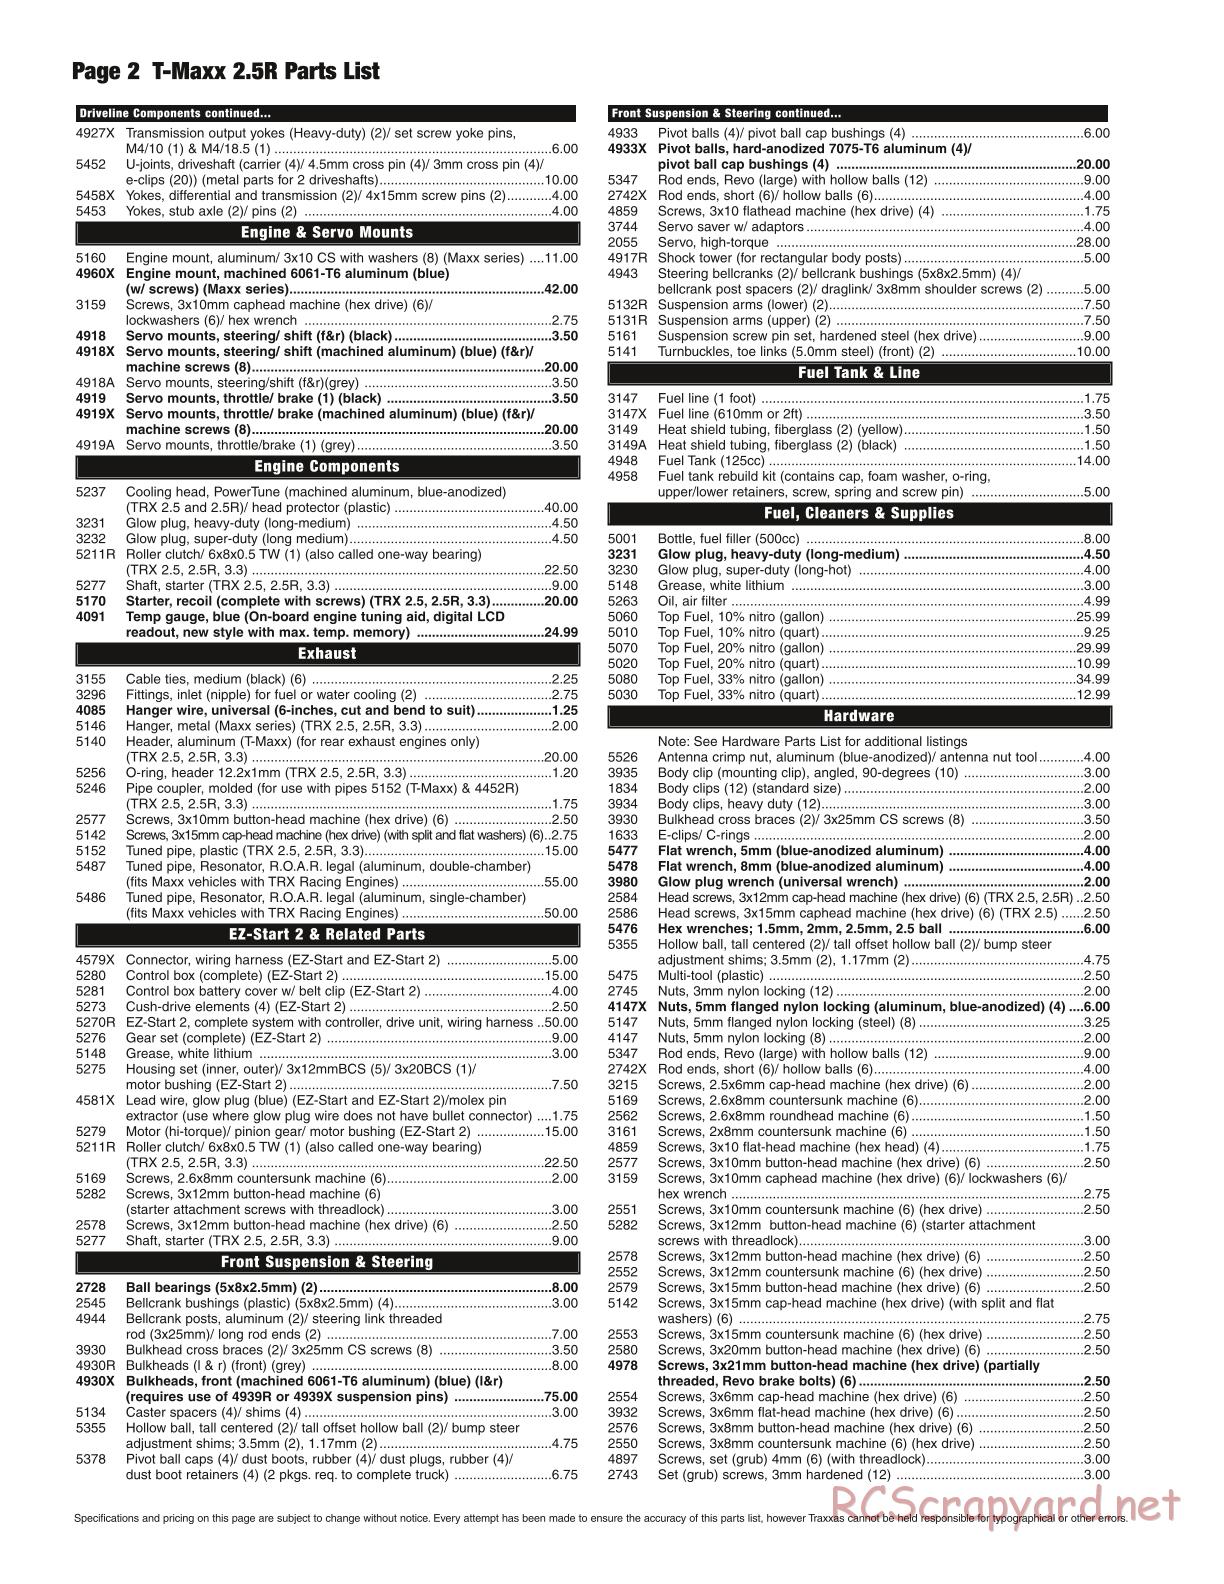 Traxxas - T-Maxx 2.5R (2006) - Parts List - Page 2